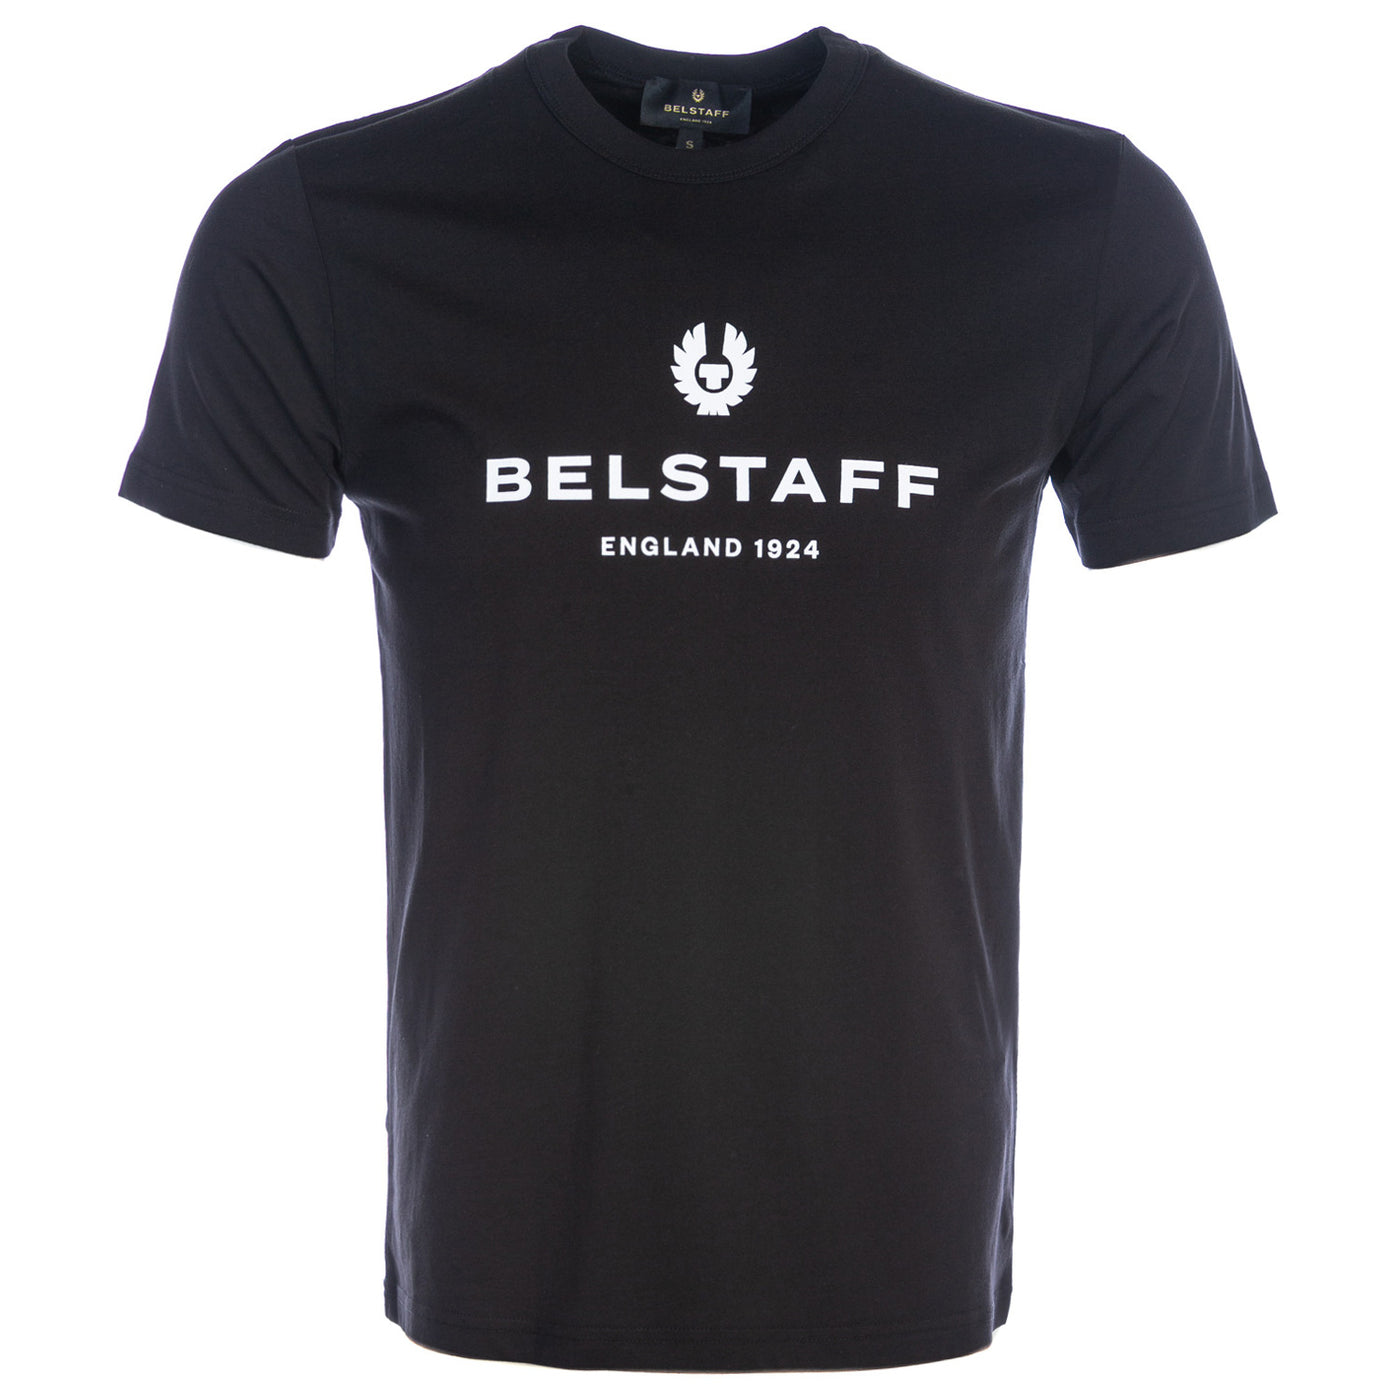 Belstaff 1924 T-Shirt in Black